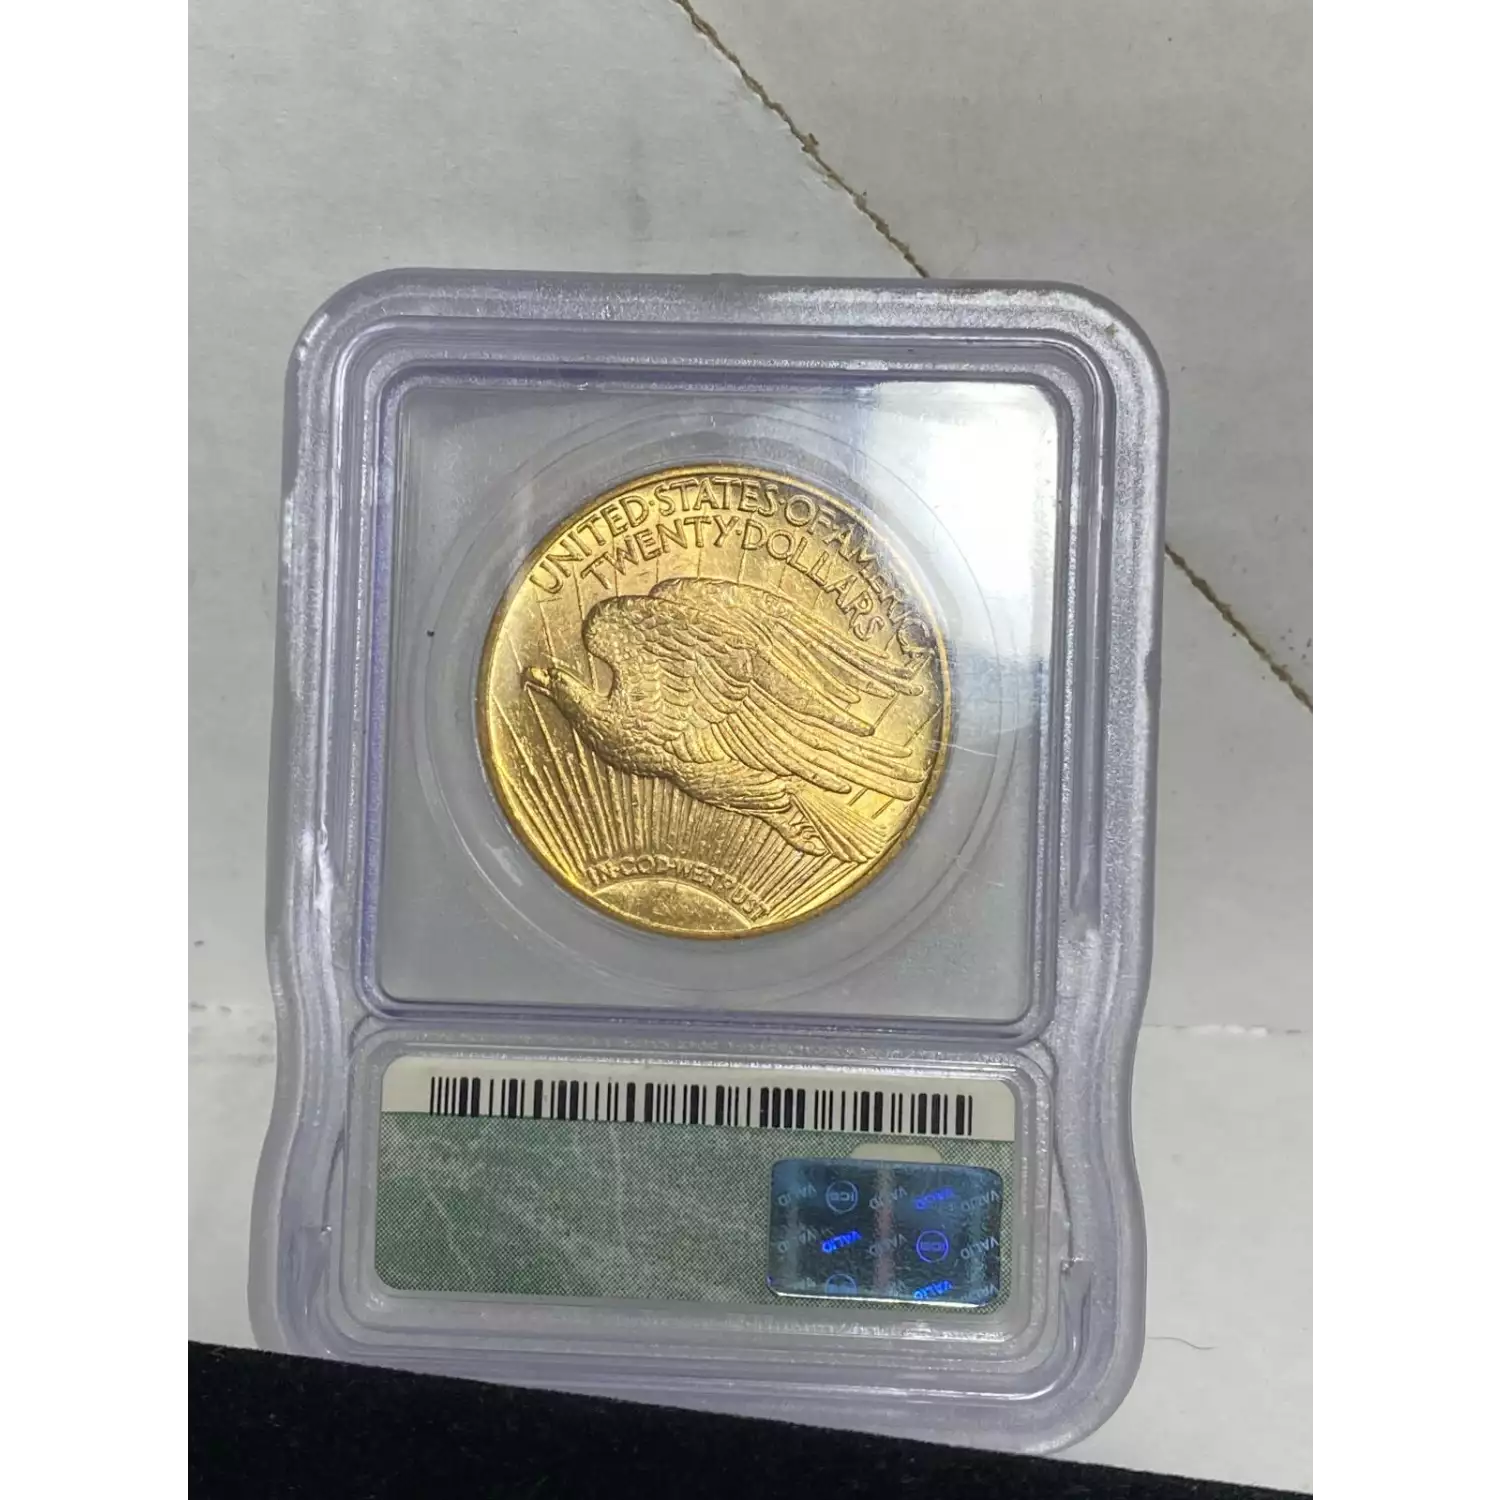 Double Eagles---Saint Gaudens 1907-1933 -Gold- 20 Dollar